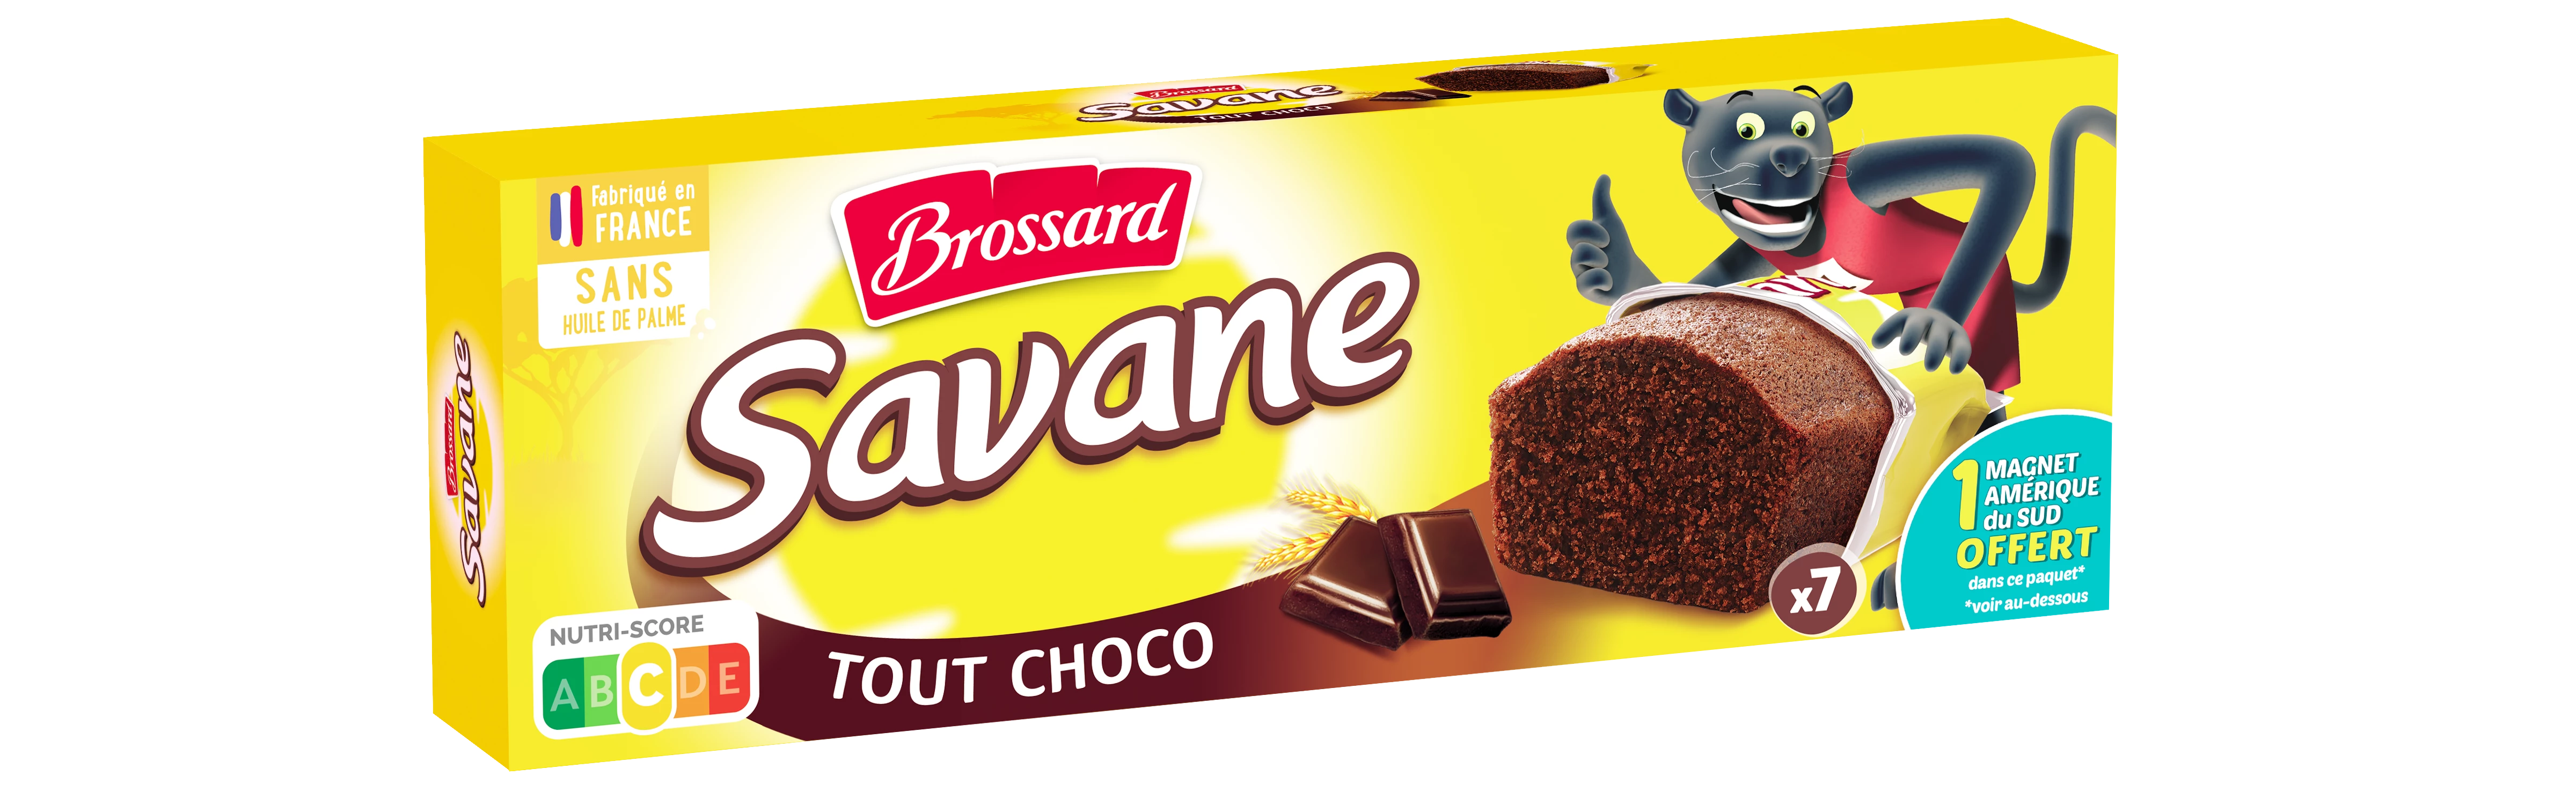 Savane Pocket All Choco X7 210g